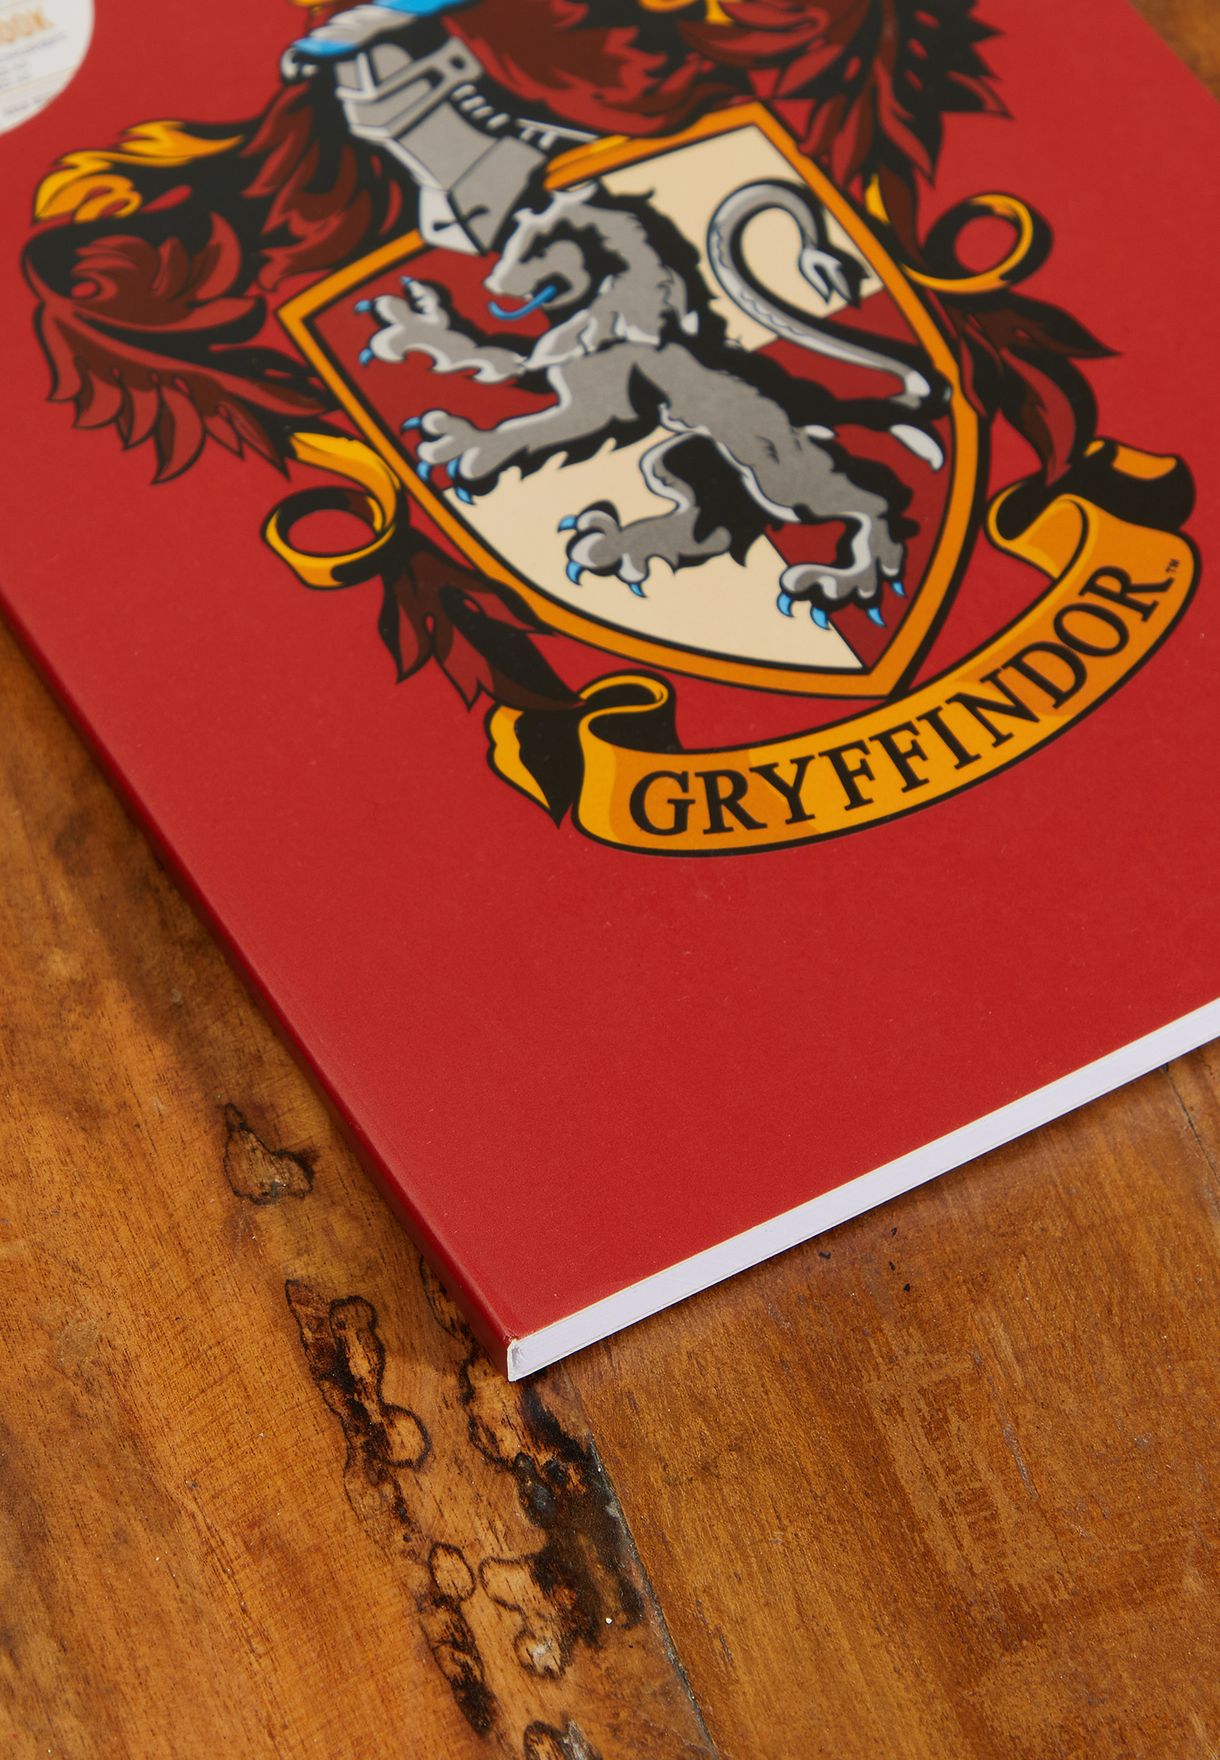 Harry Potter A5 Notebook - Gryffindor